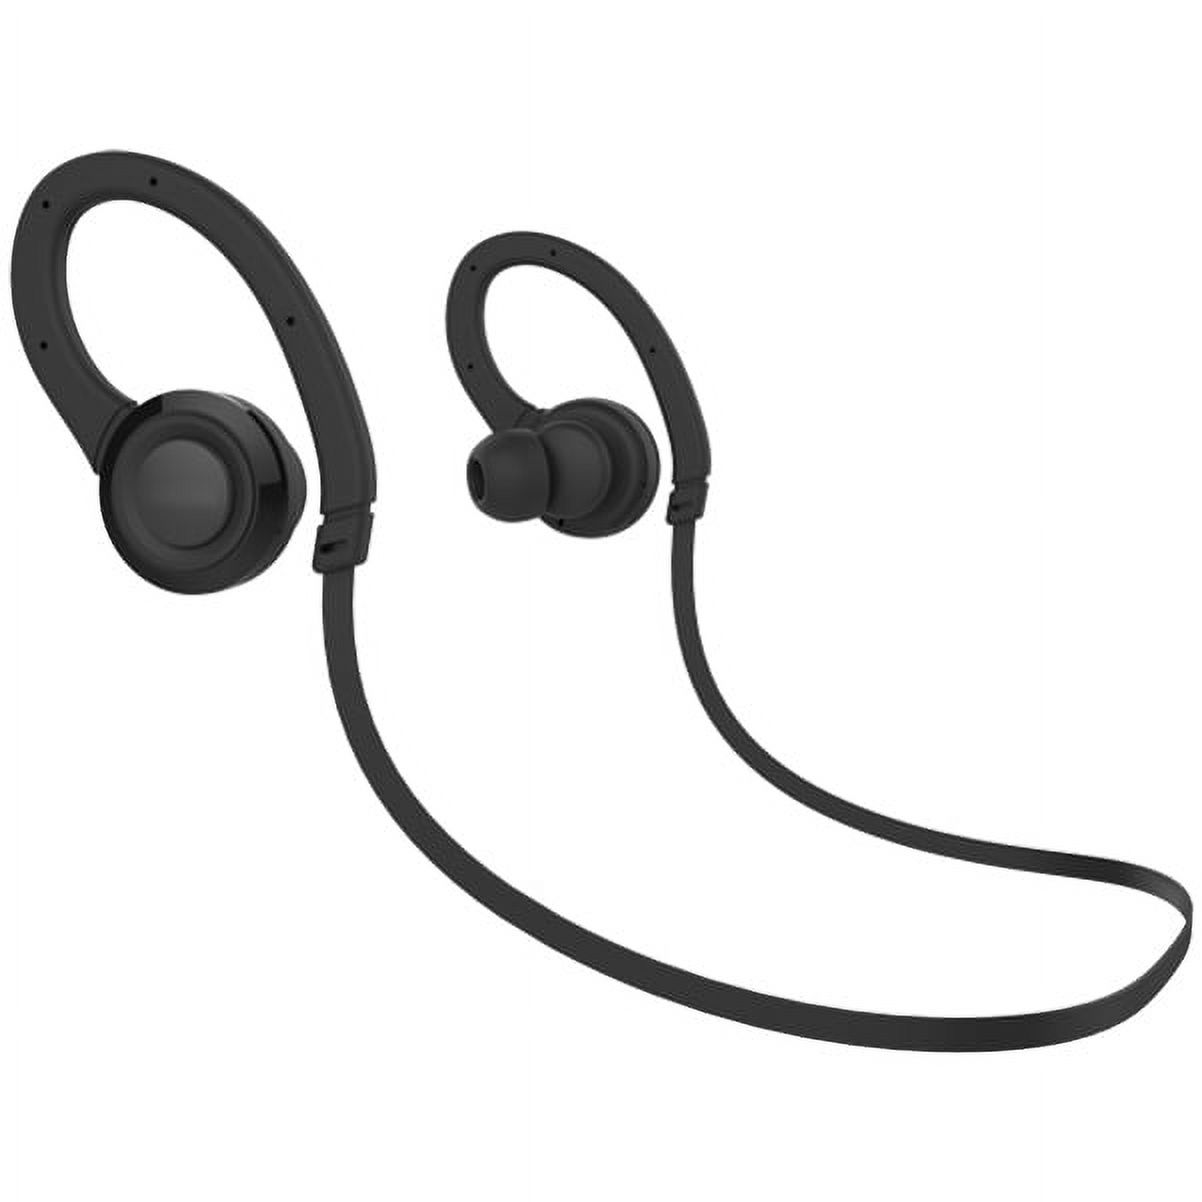 AWAccessory Bluetooth Sports In-Ear Headphones, Black, A03-JONBJL - image 1 of 6